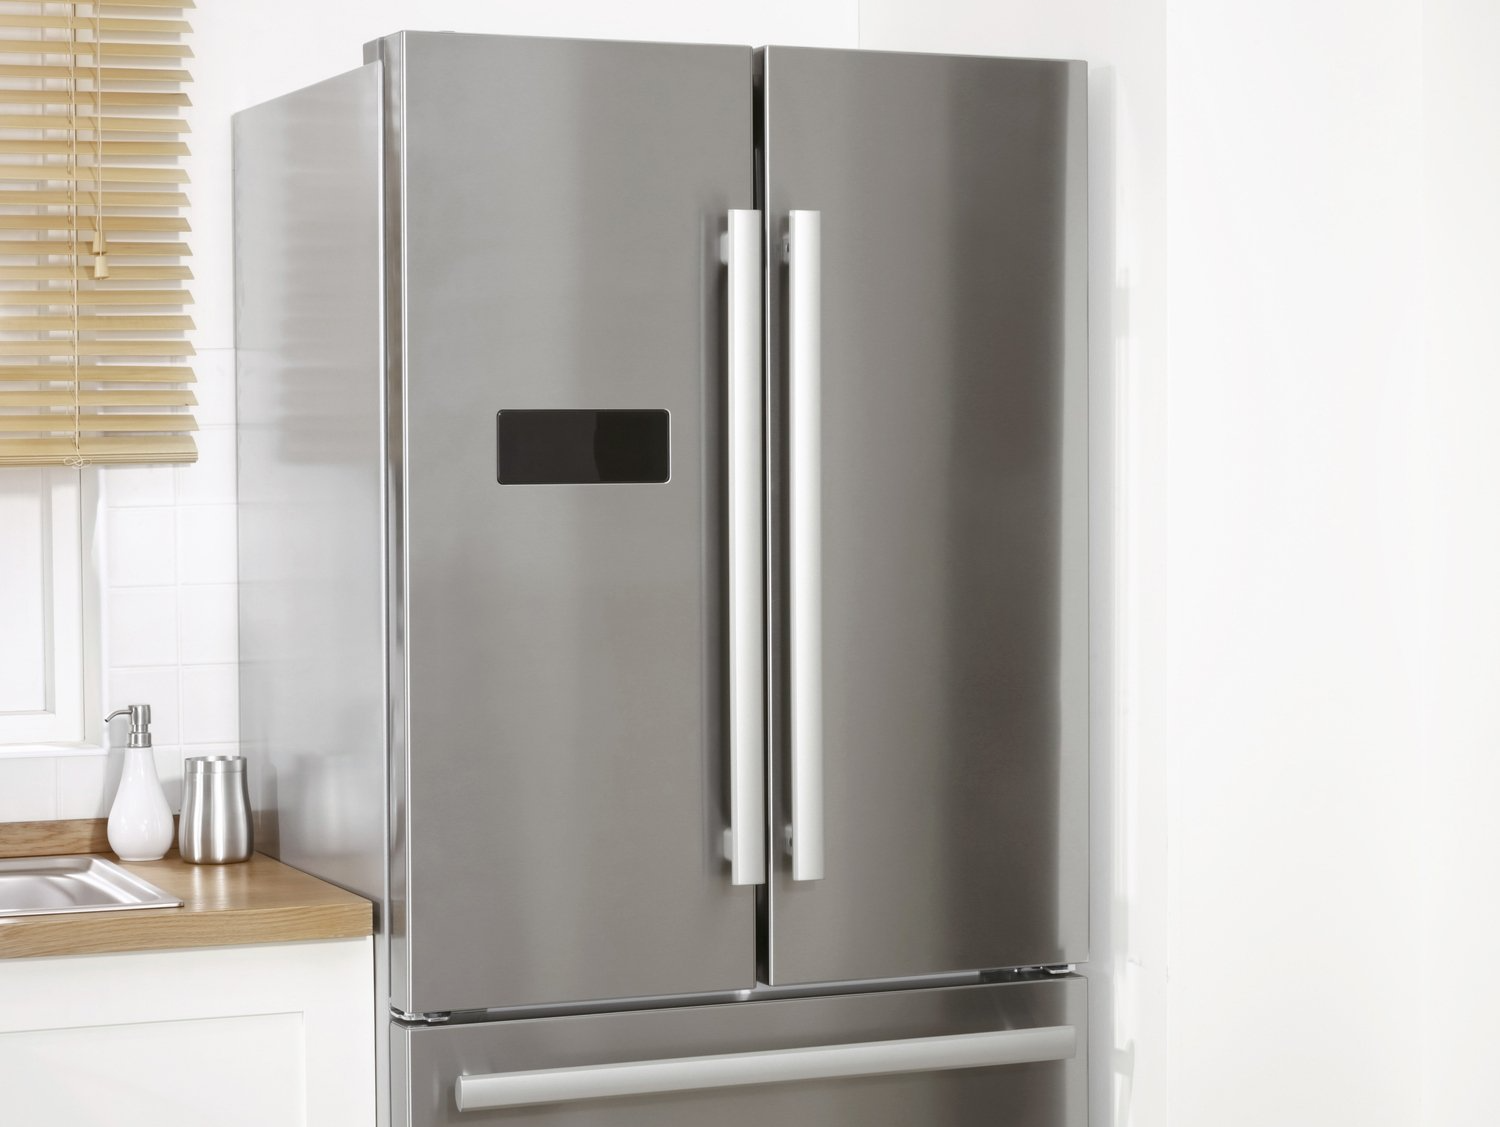 French Door Refrigerator - Lockport, NY - Mullen’s Appliance Service